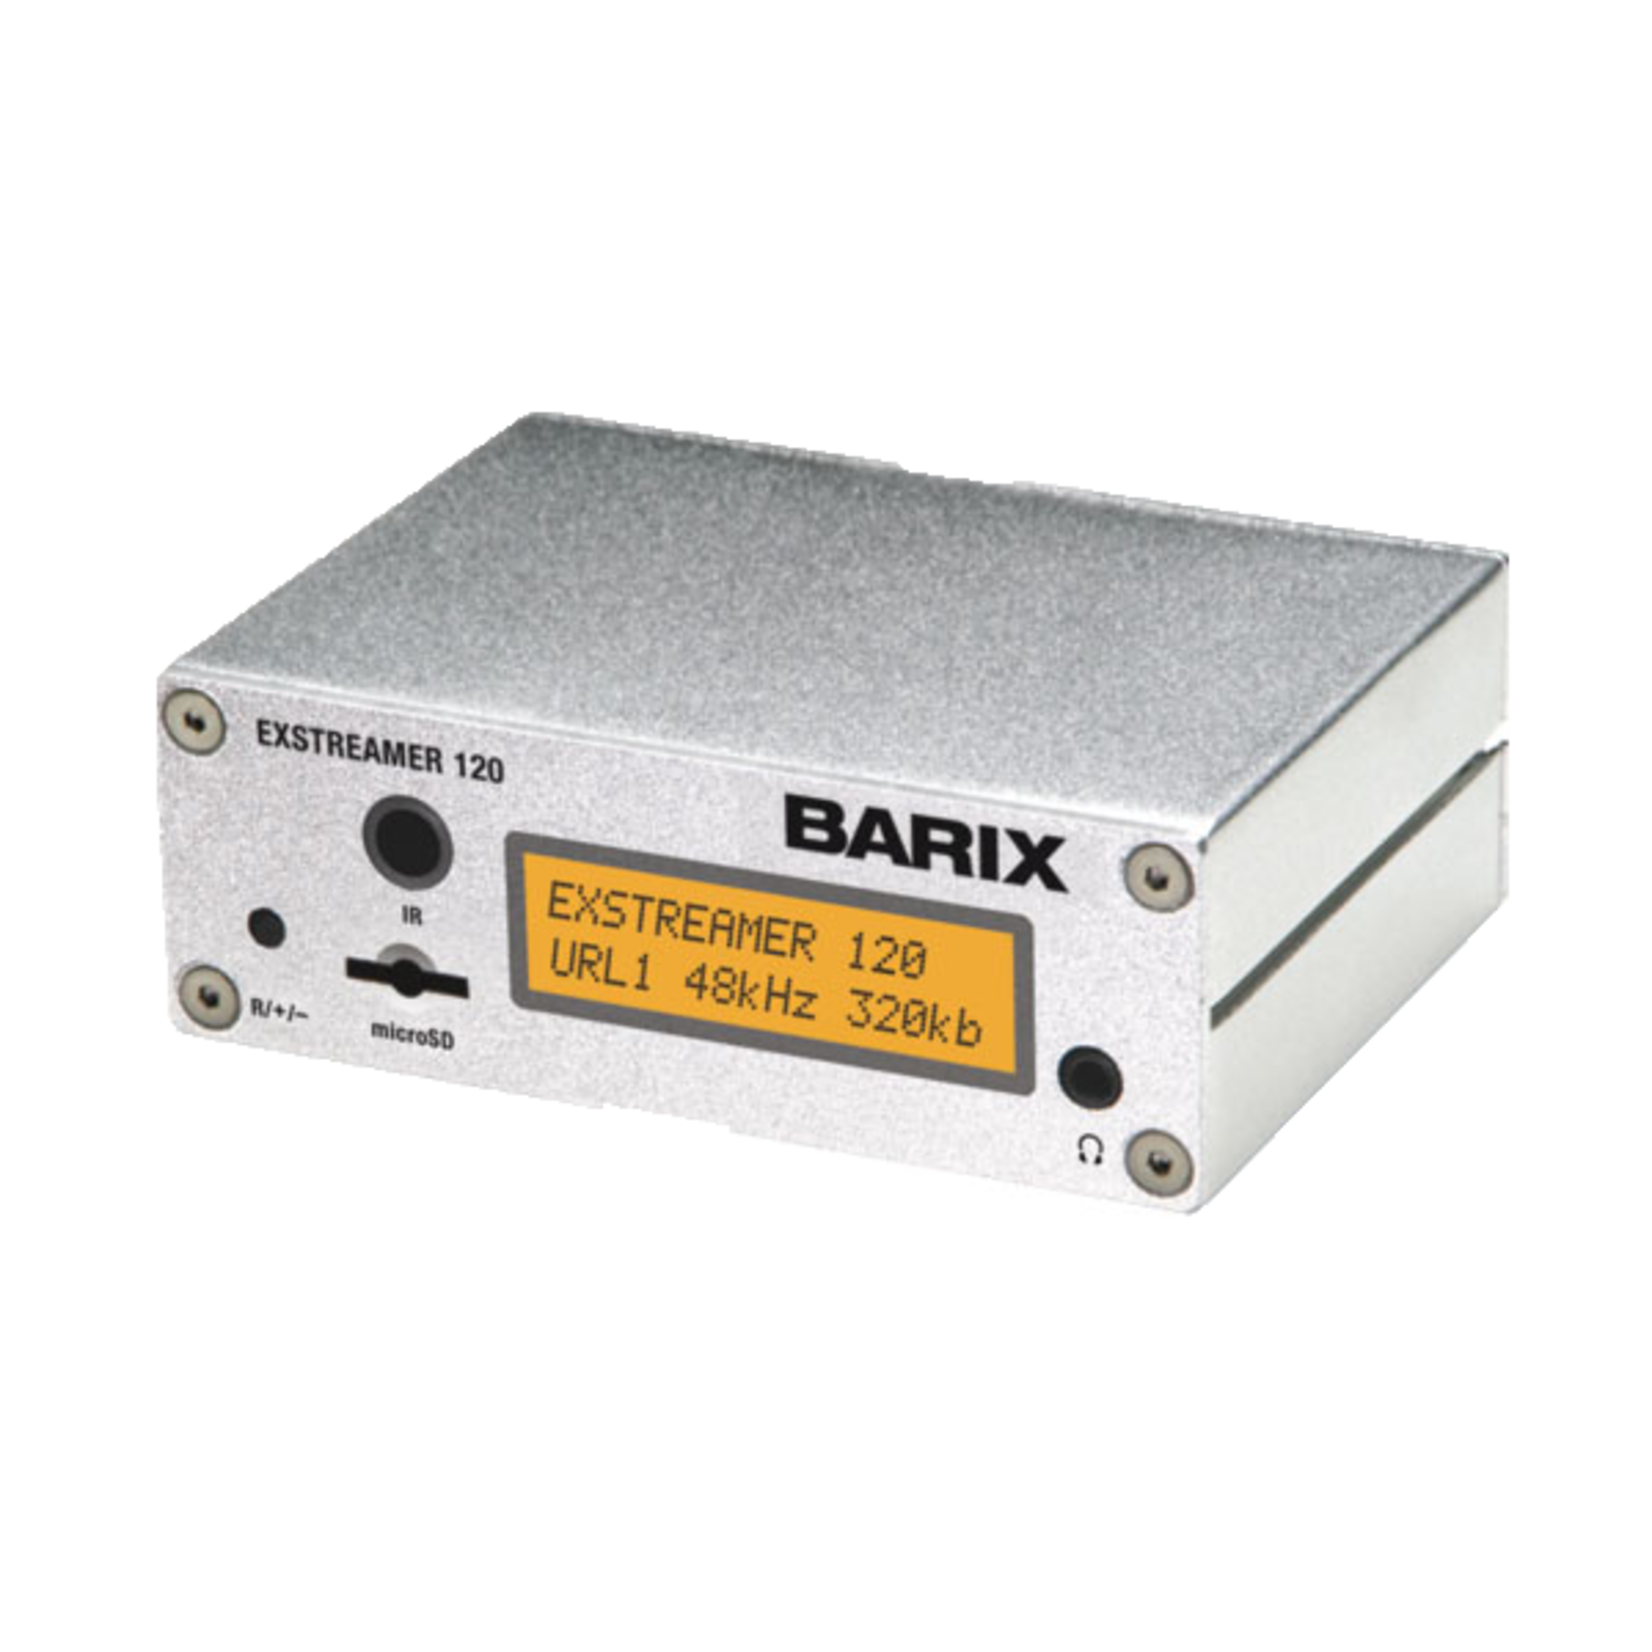 BARIX Exstreamer 120 Display, EU package (230V)